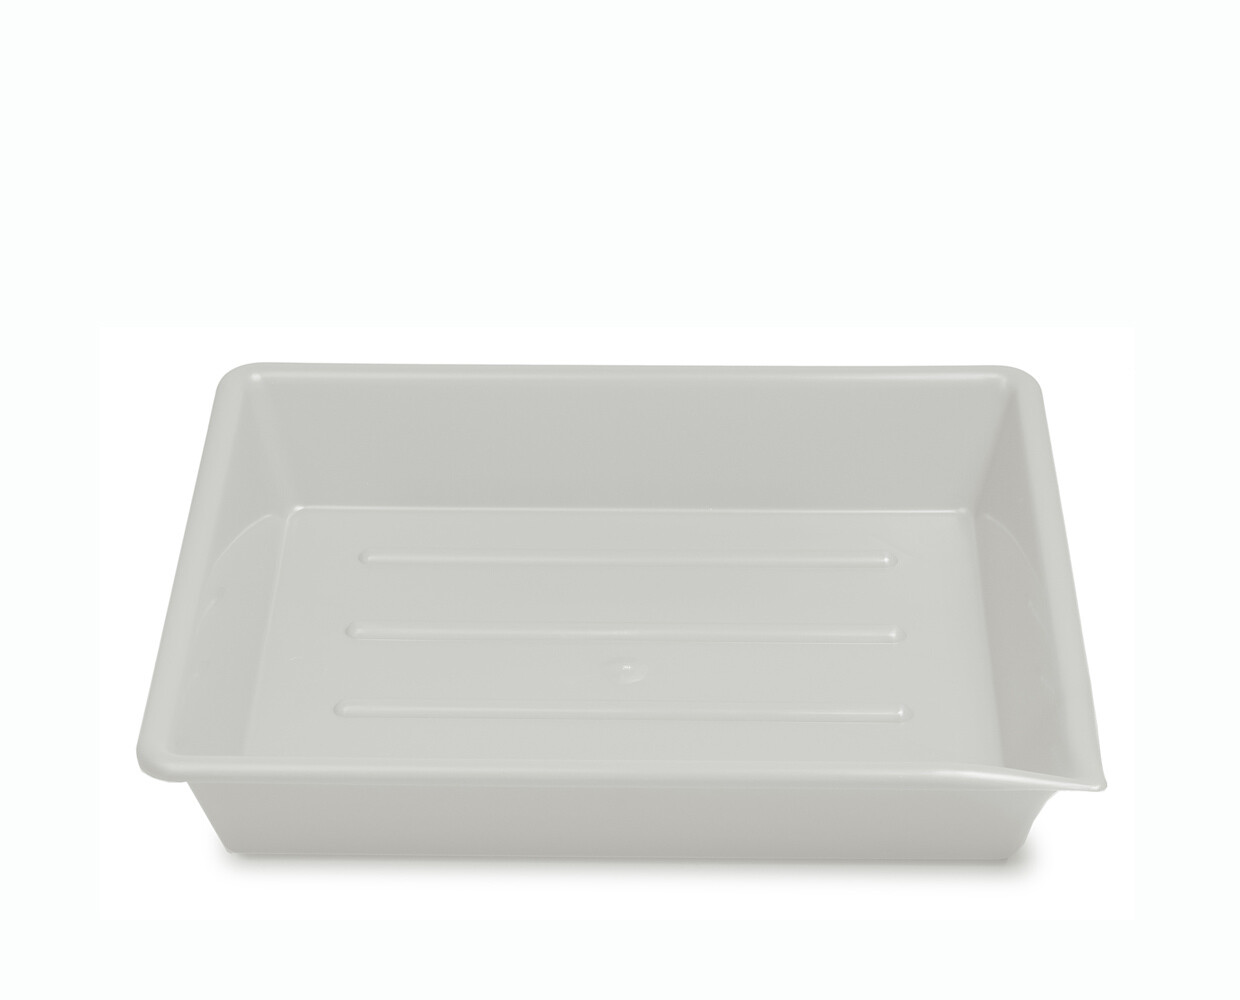 Kaiser lab trays 5x7" (13x18cm) white